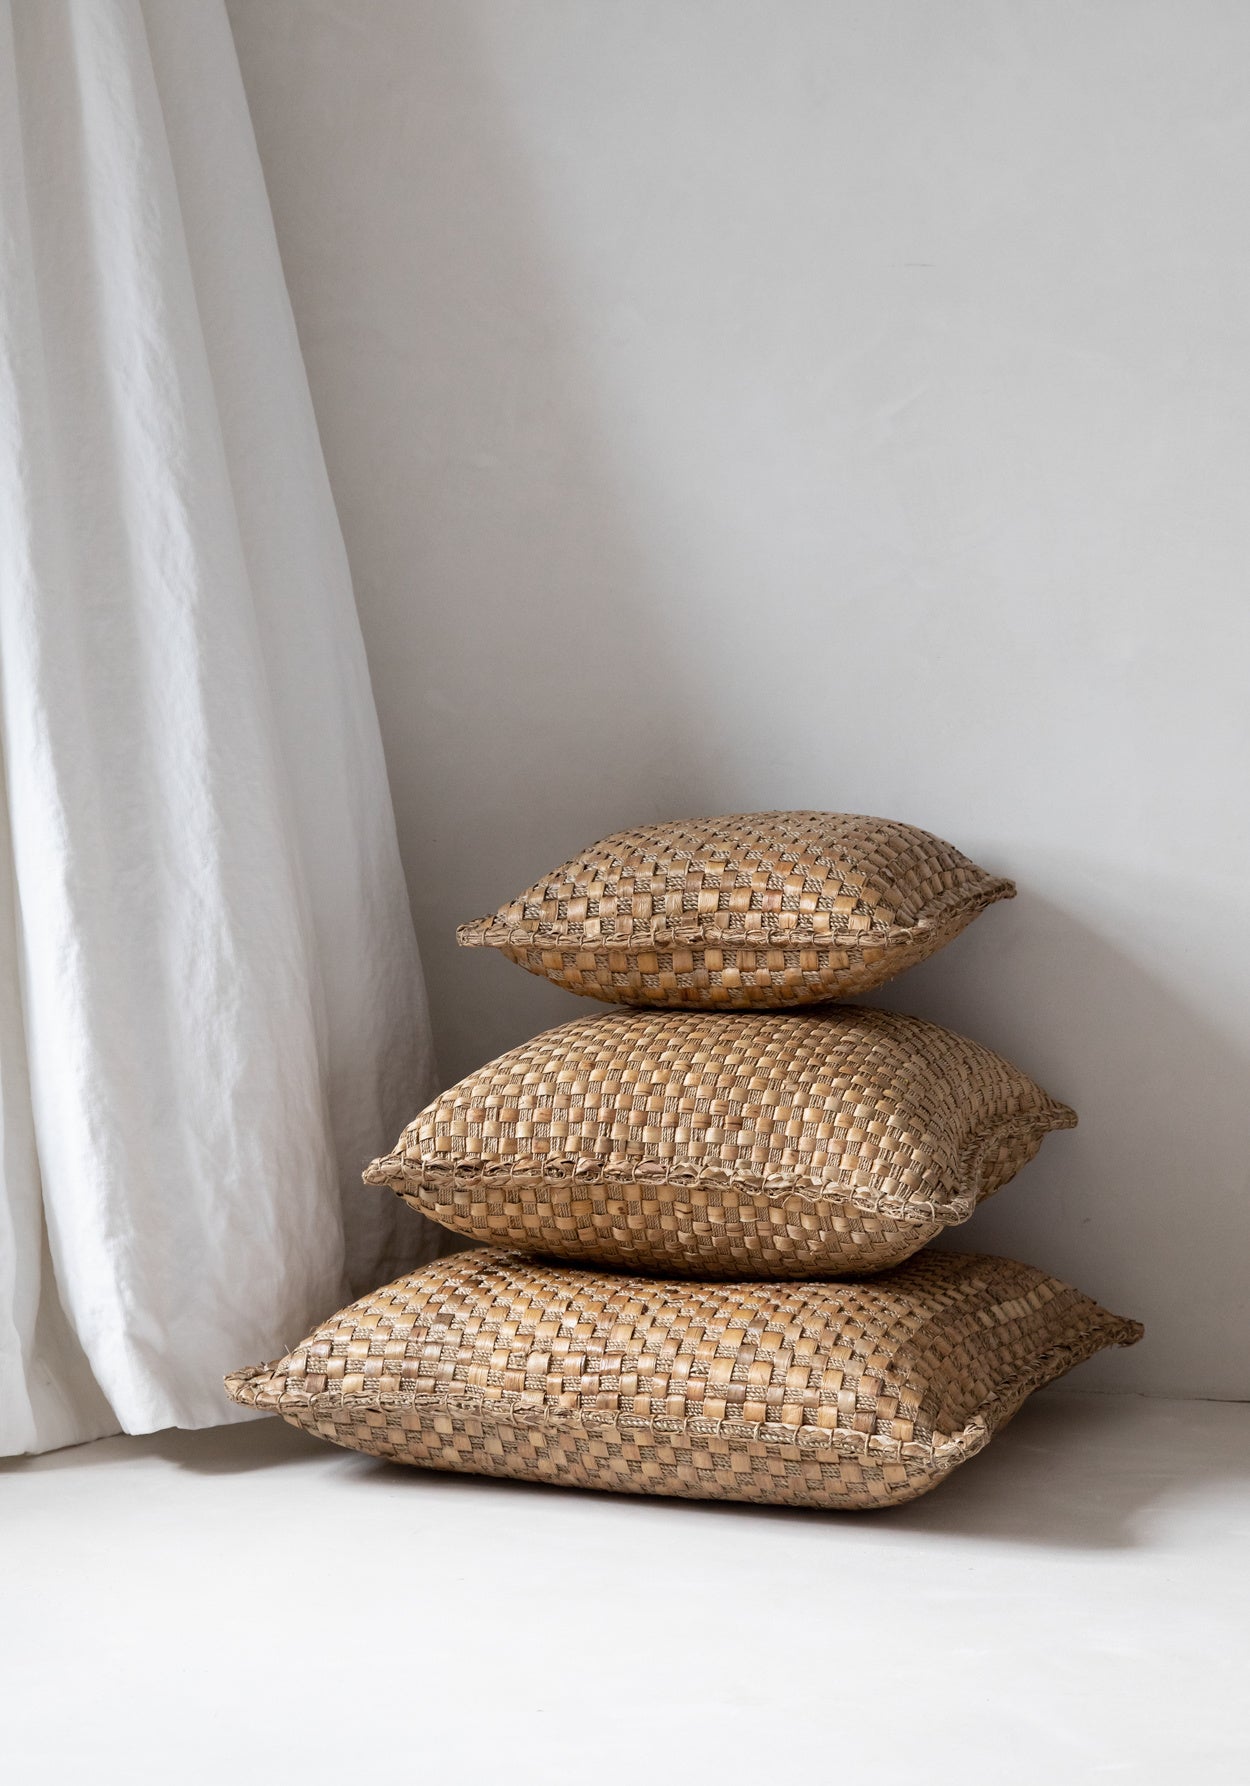 The Hyacinth Pillow - 60x60